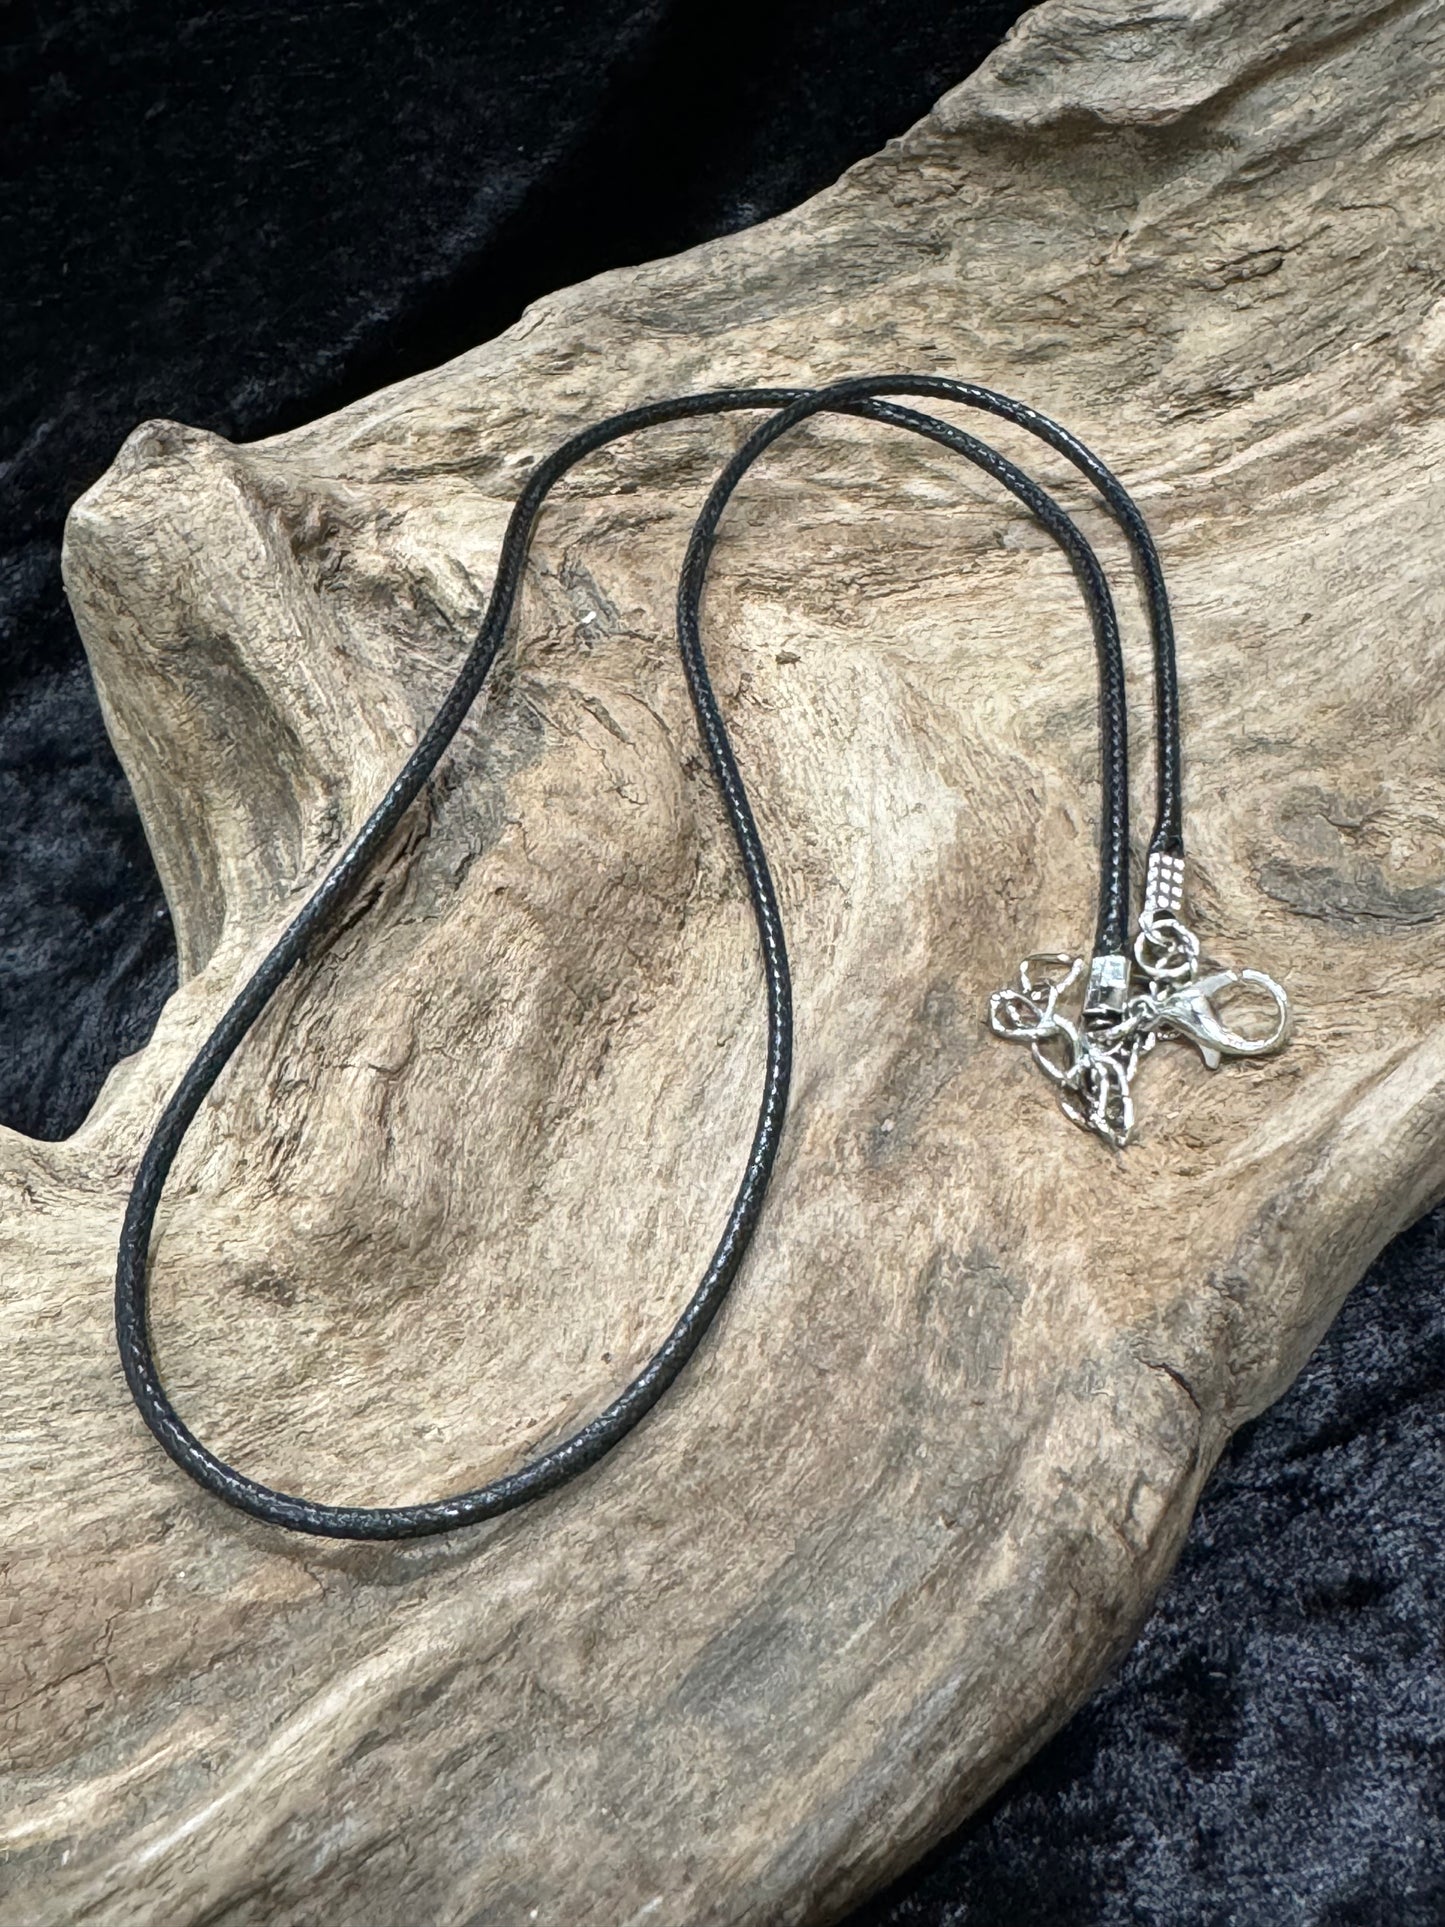 Snowflake Obsidian wire wrapped pendant - I got this